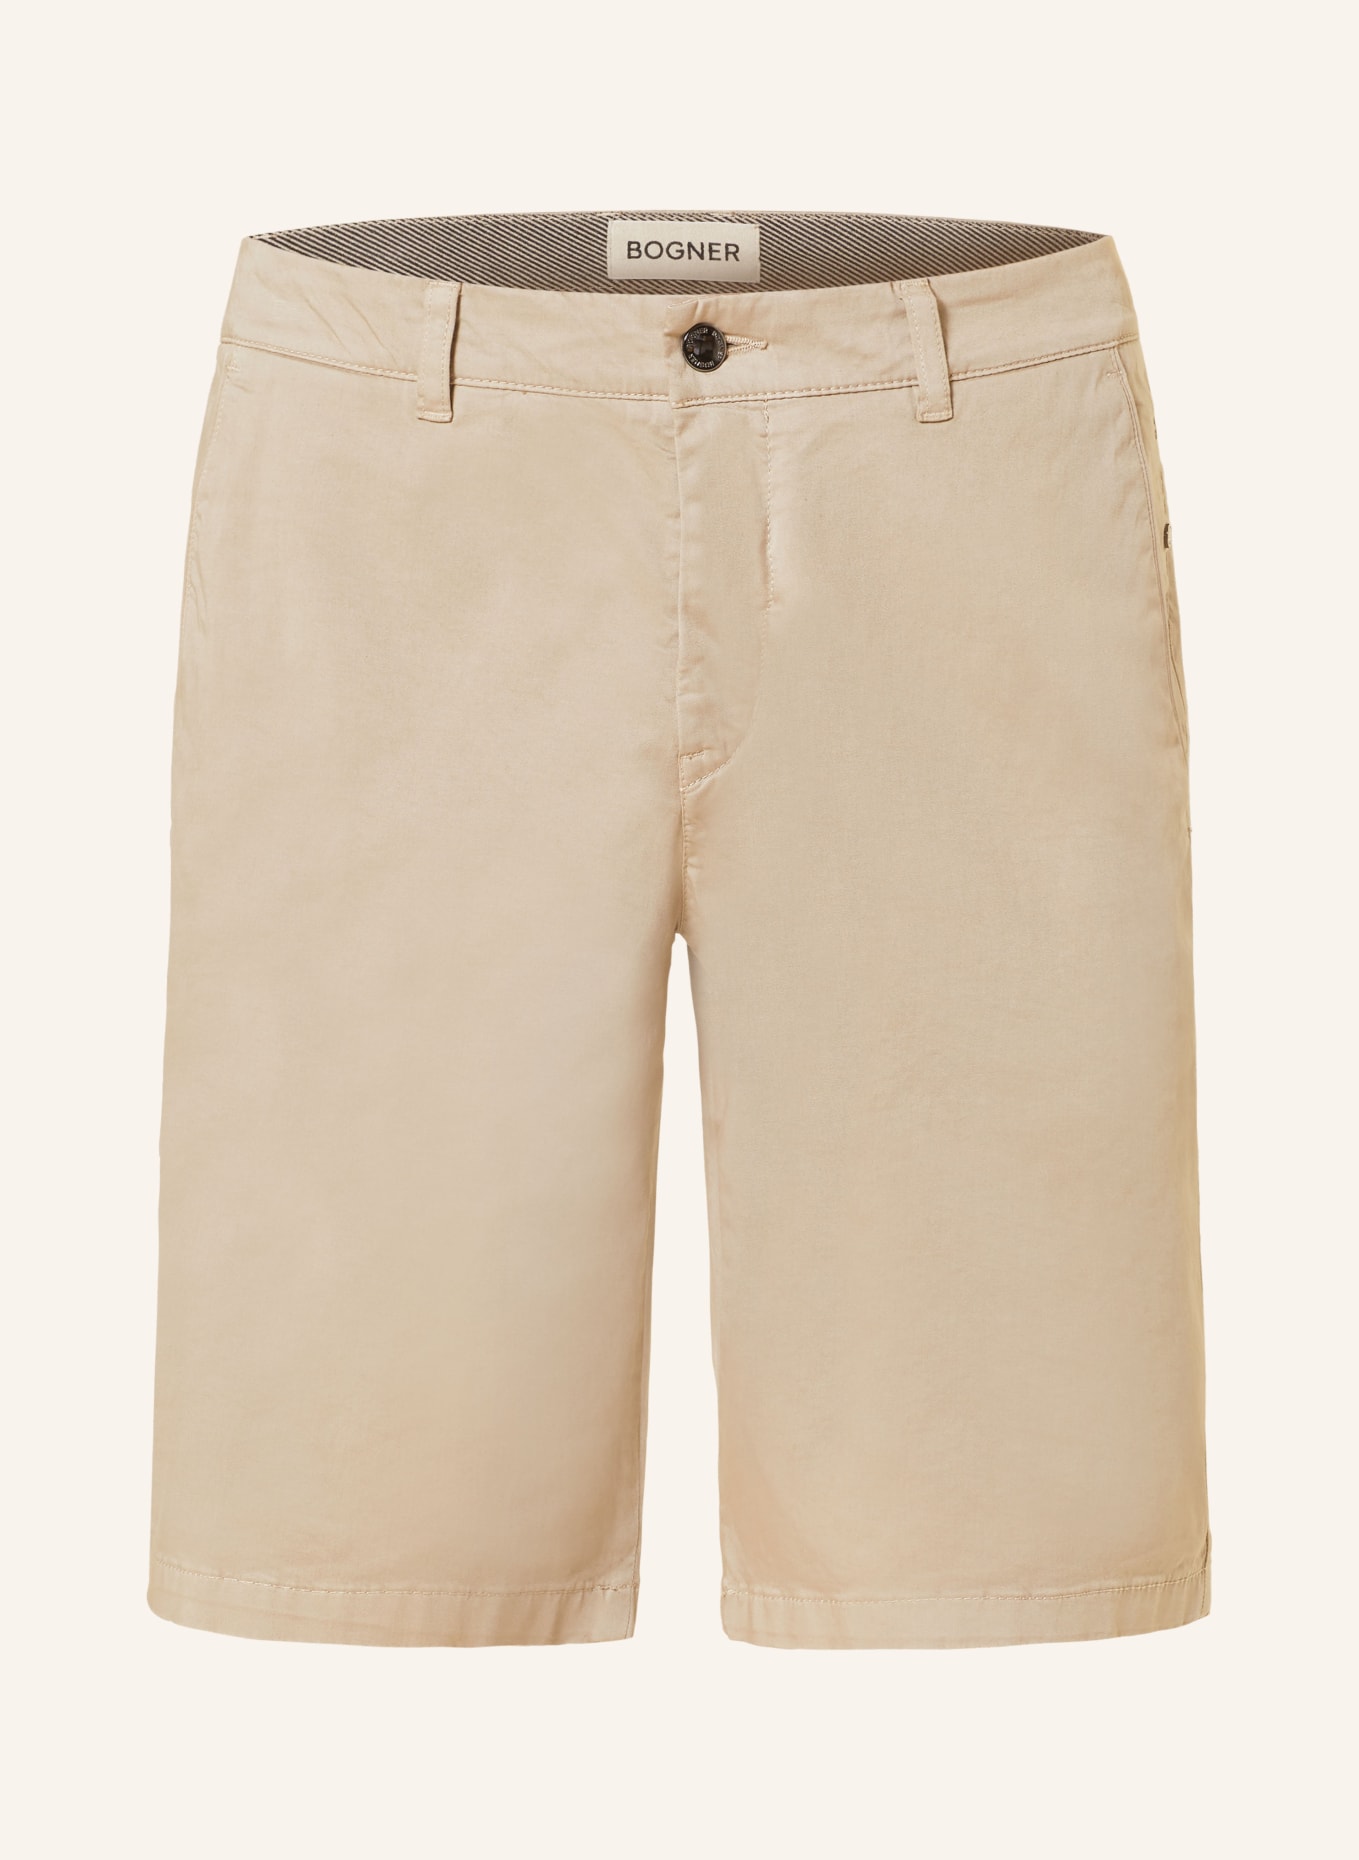 BOGNER Shorts MIAMI-G6, Farbe: BEIGE (Bild 1)